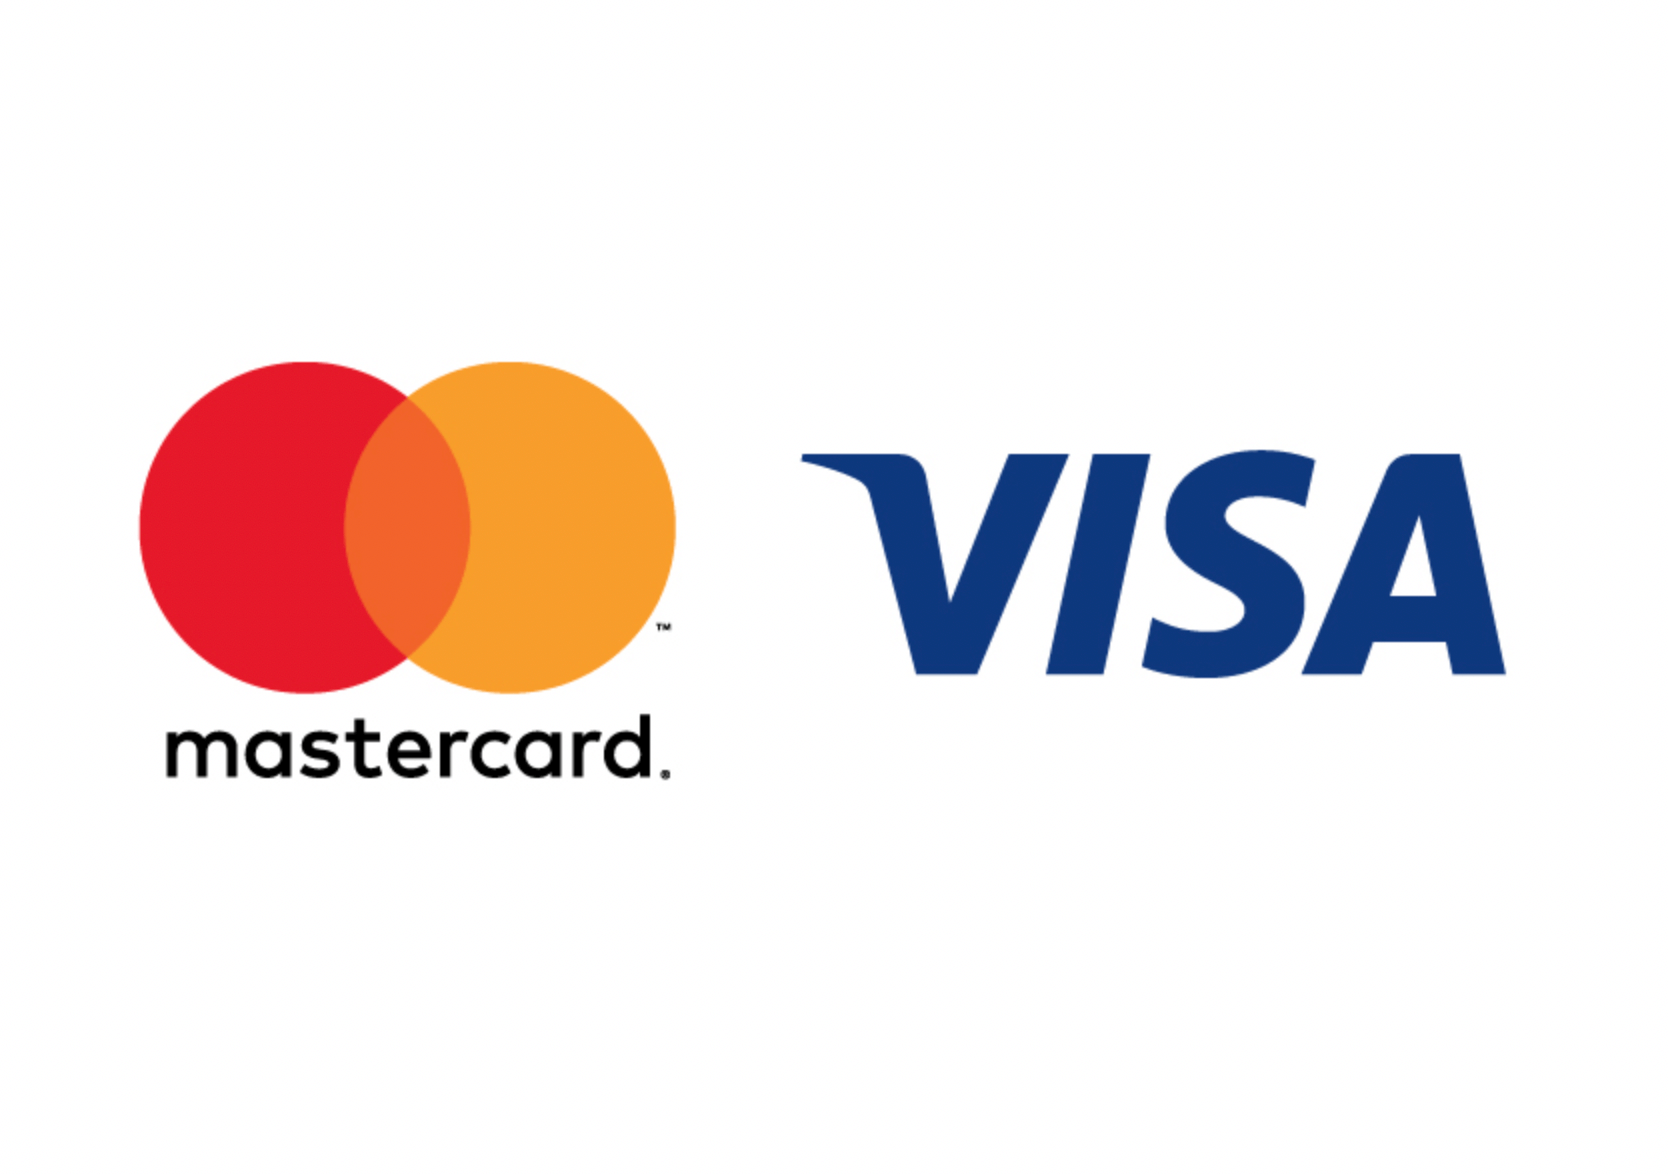 Visa master. Международные платежные системы visa и MASTERCARD. Логотип visa MASTERCARD. Виза мастер карт. Иконка виза Мастеркард.